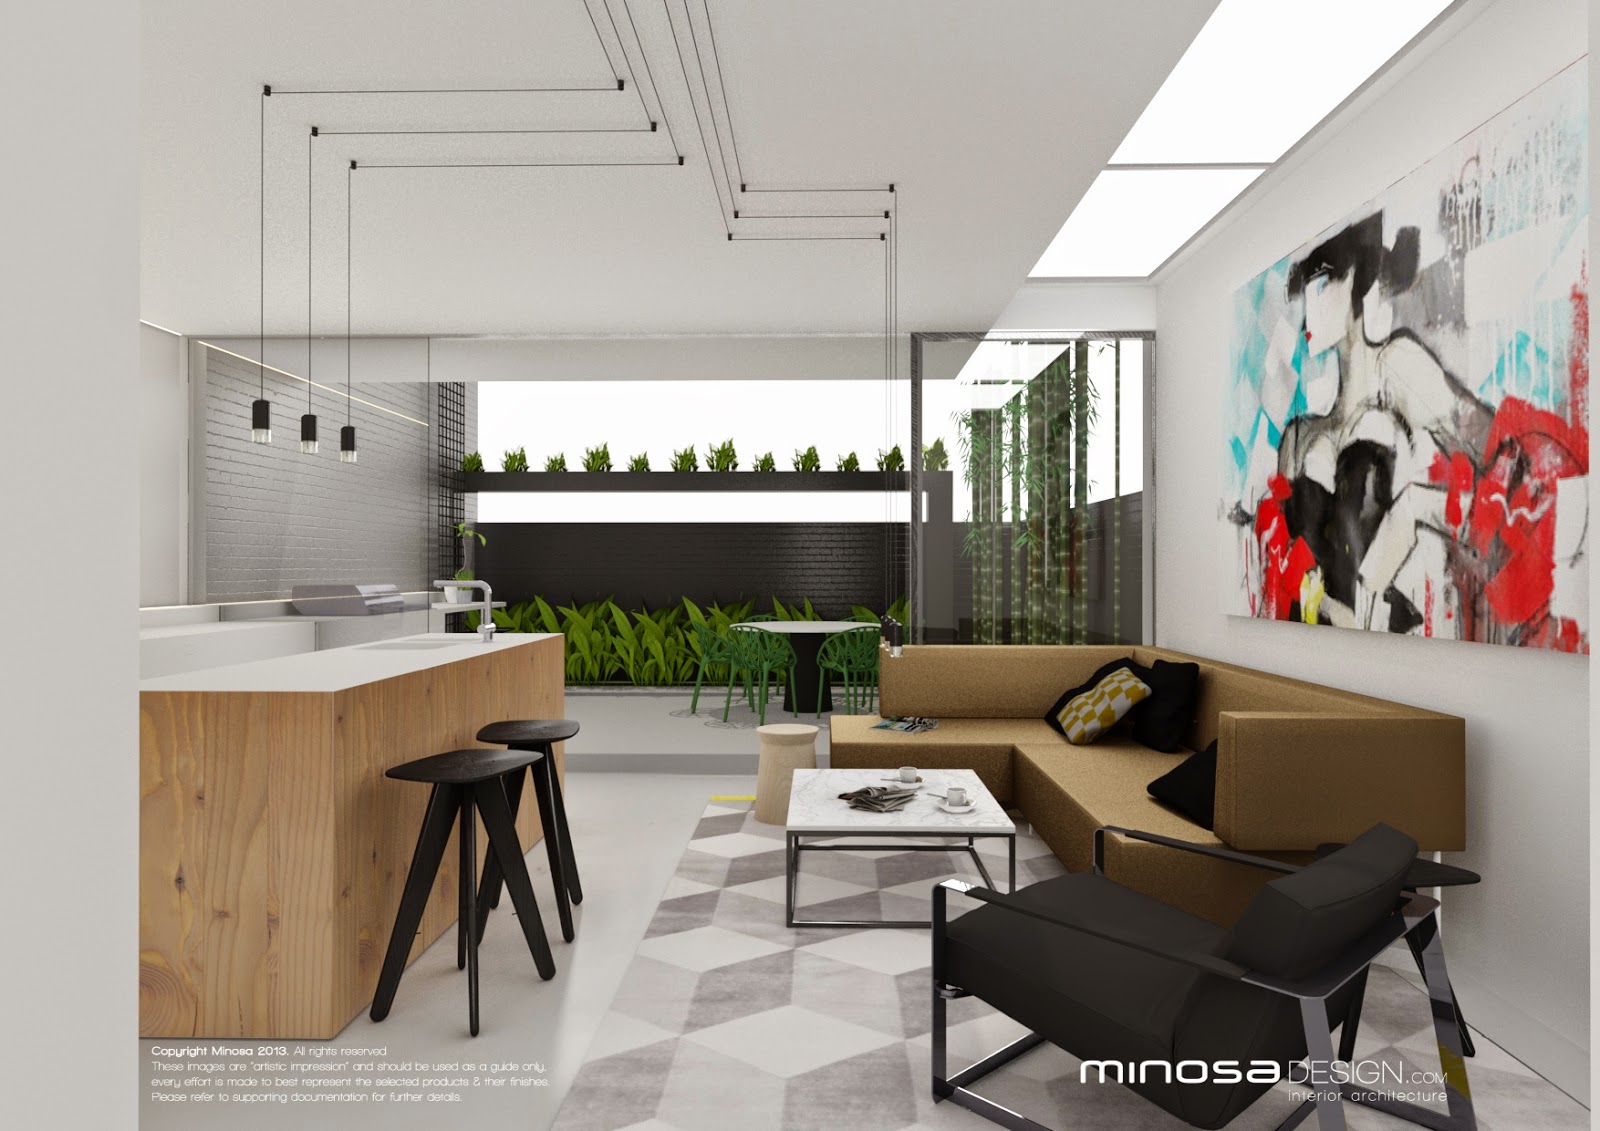 Pop Design Kichan : New trends for false ceiling designs for kitchen